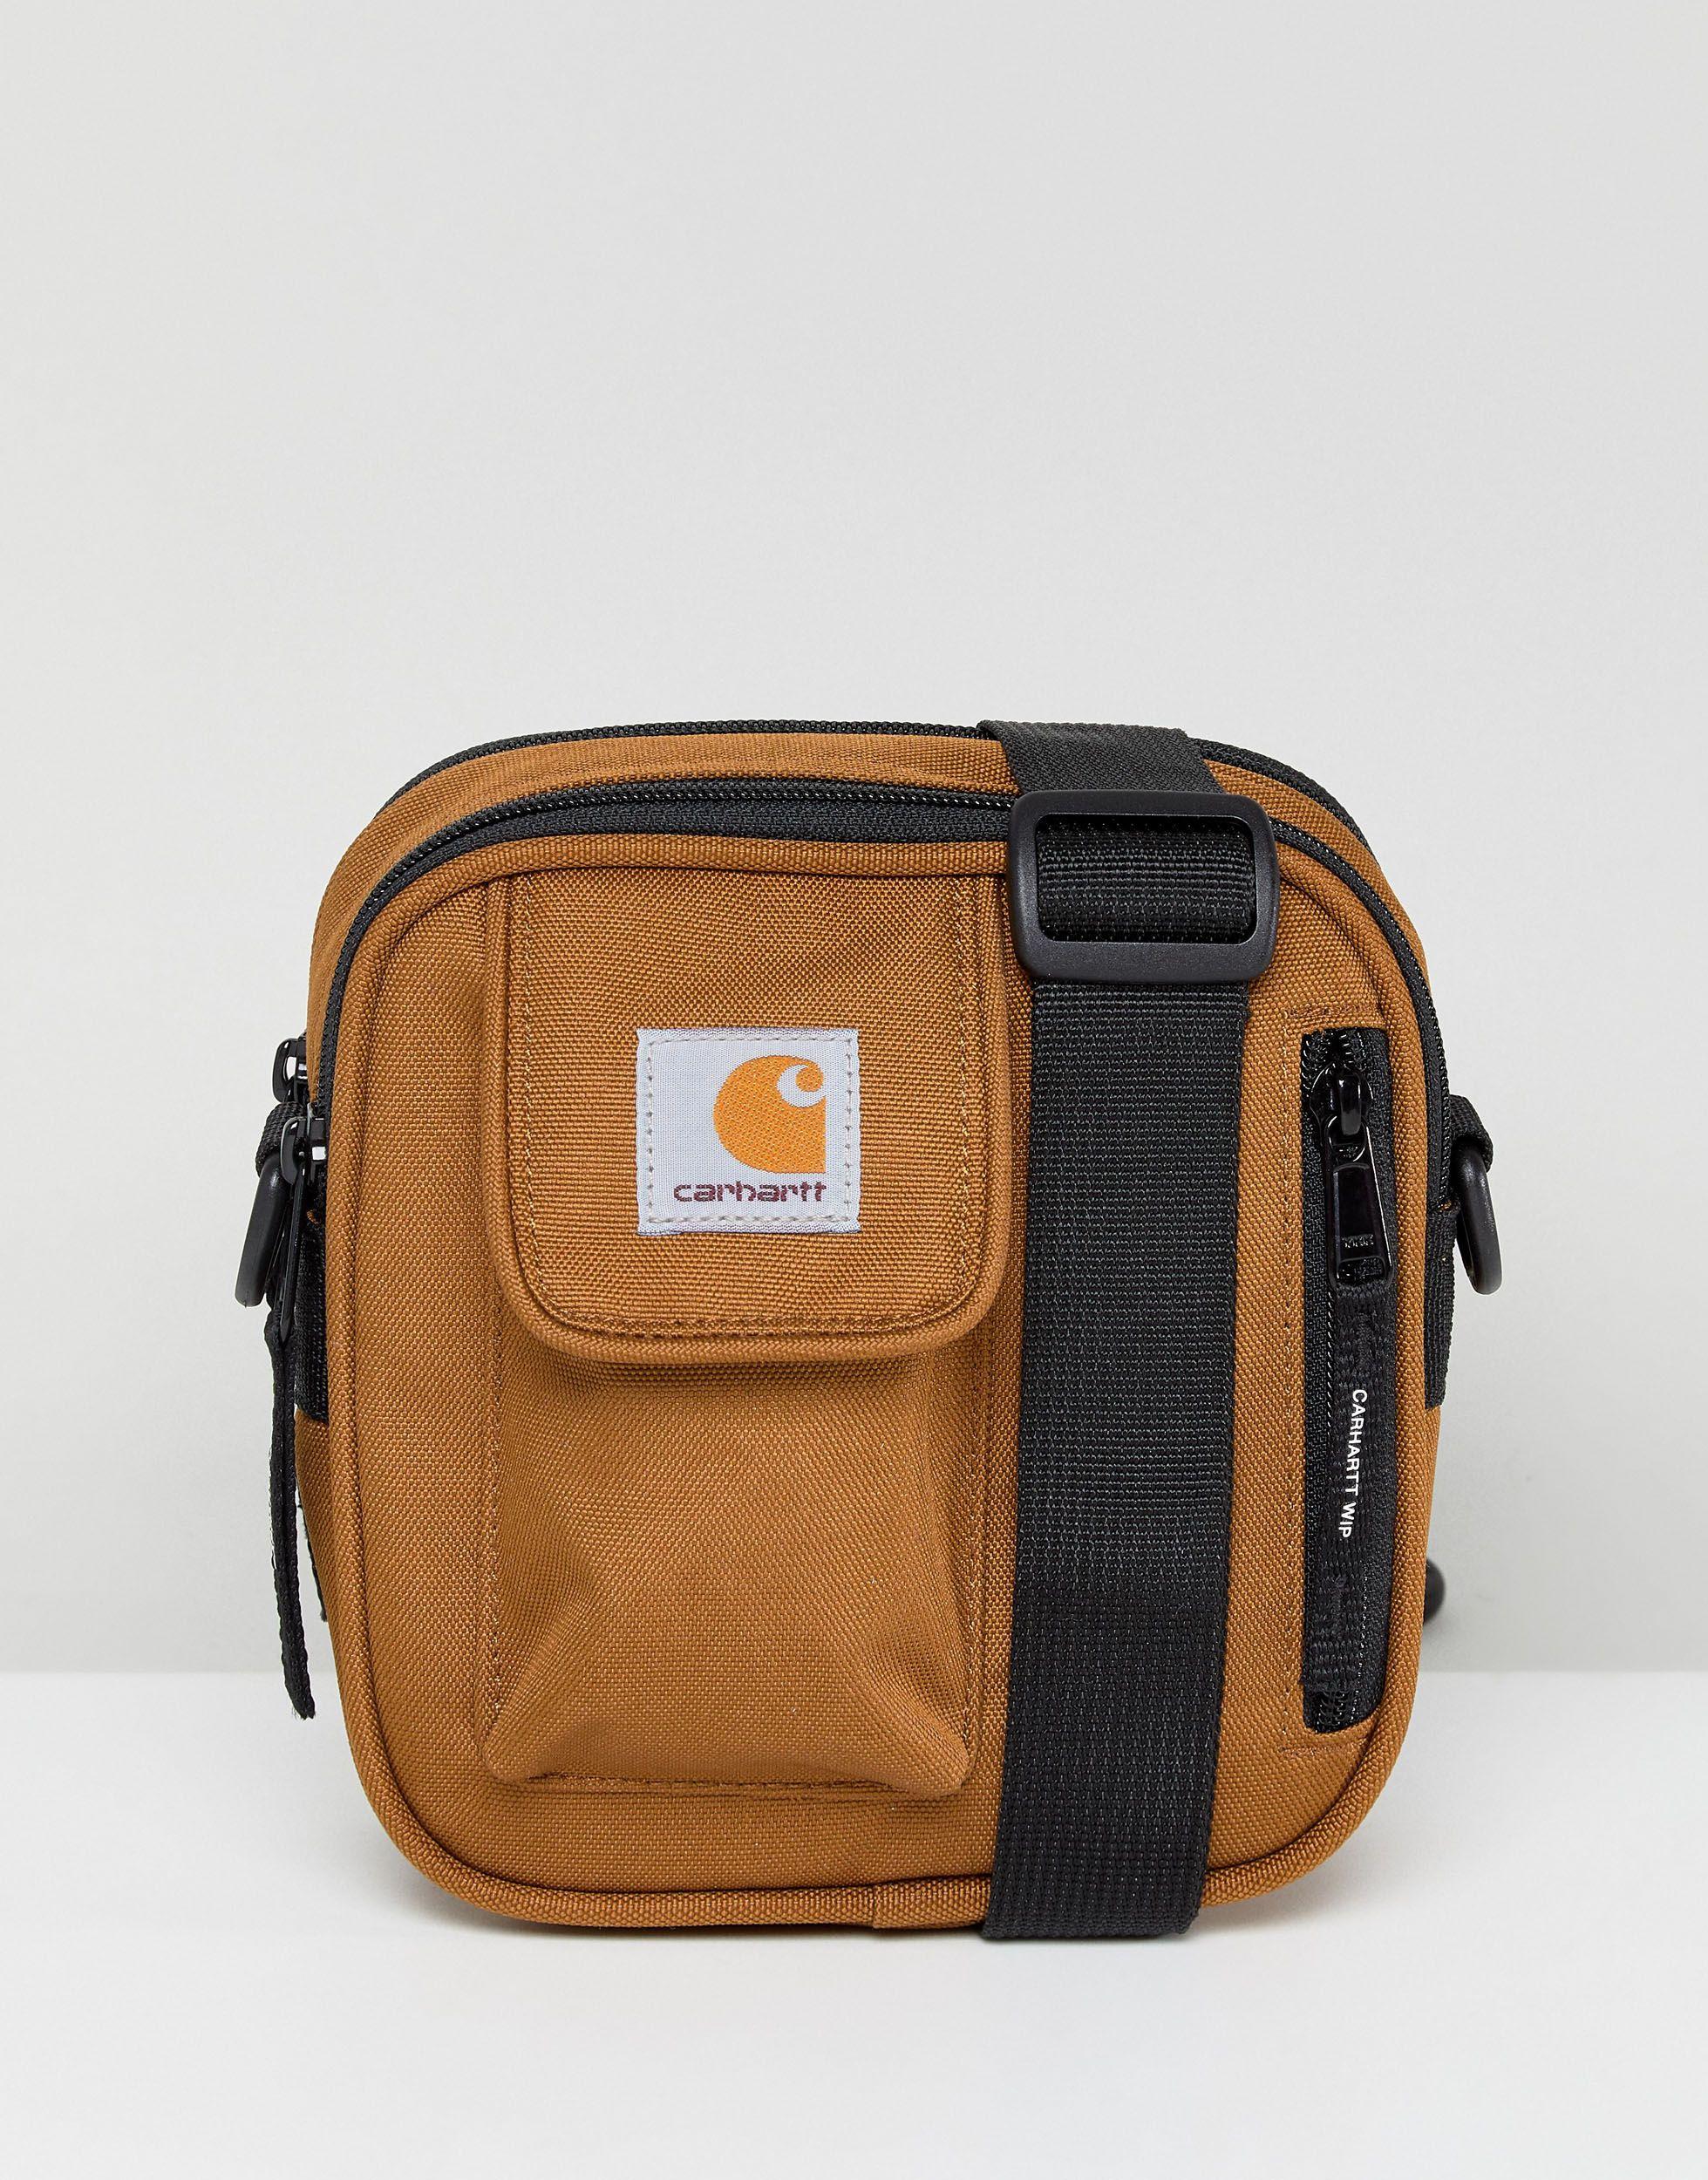 Carhartt сумка через плечо. Carhartt WIP сумка. Сумка Carhartt WIP Essentials Bag. Барсетка Carhartt WIP. Carhartt WIP сумка через плечо.